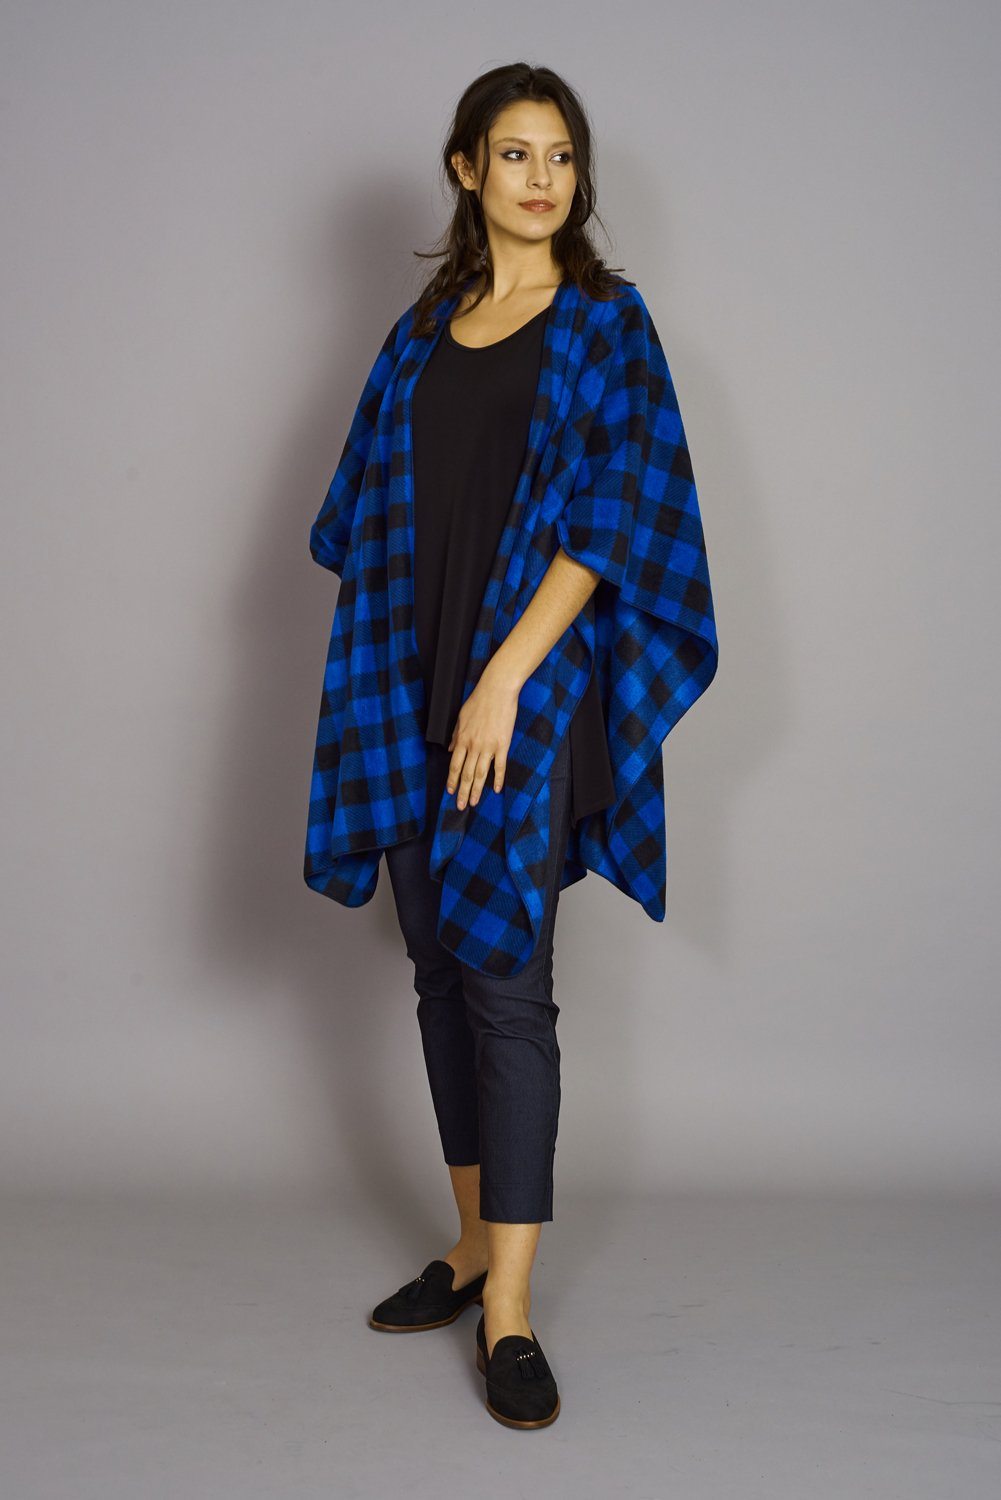 Royal Blue & Black Buffalo Print - Premium Mountain Fleece Cape Shawl Poncho ~ Made in Canada (Sale Price: $76.50 CAD)